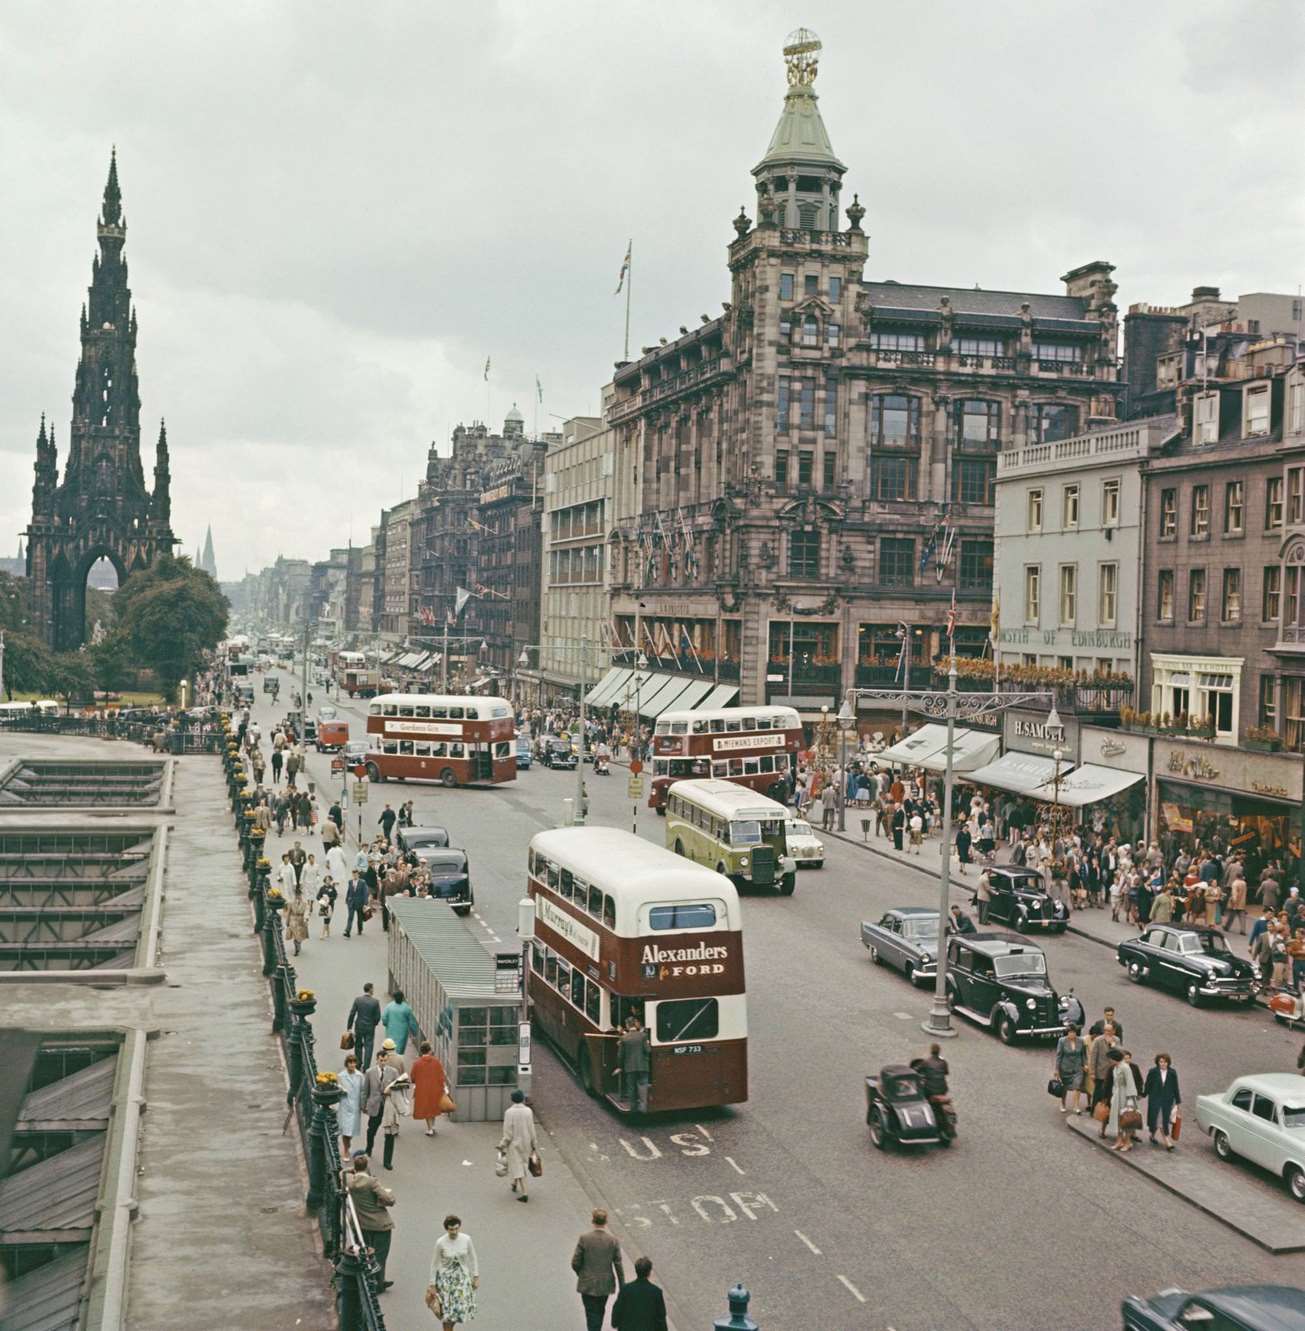 Buses, cars and pedestrians making their way along Princes Street in Edinburgh, Scotland during the Edinburgh Festival in 1960.